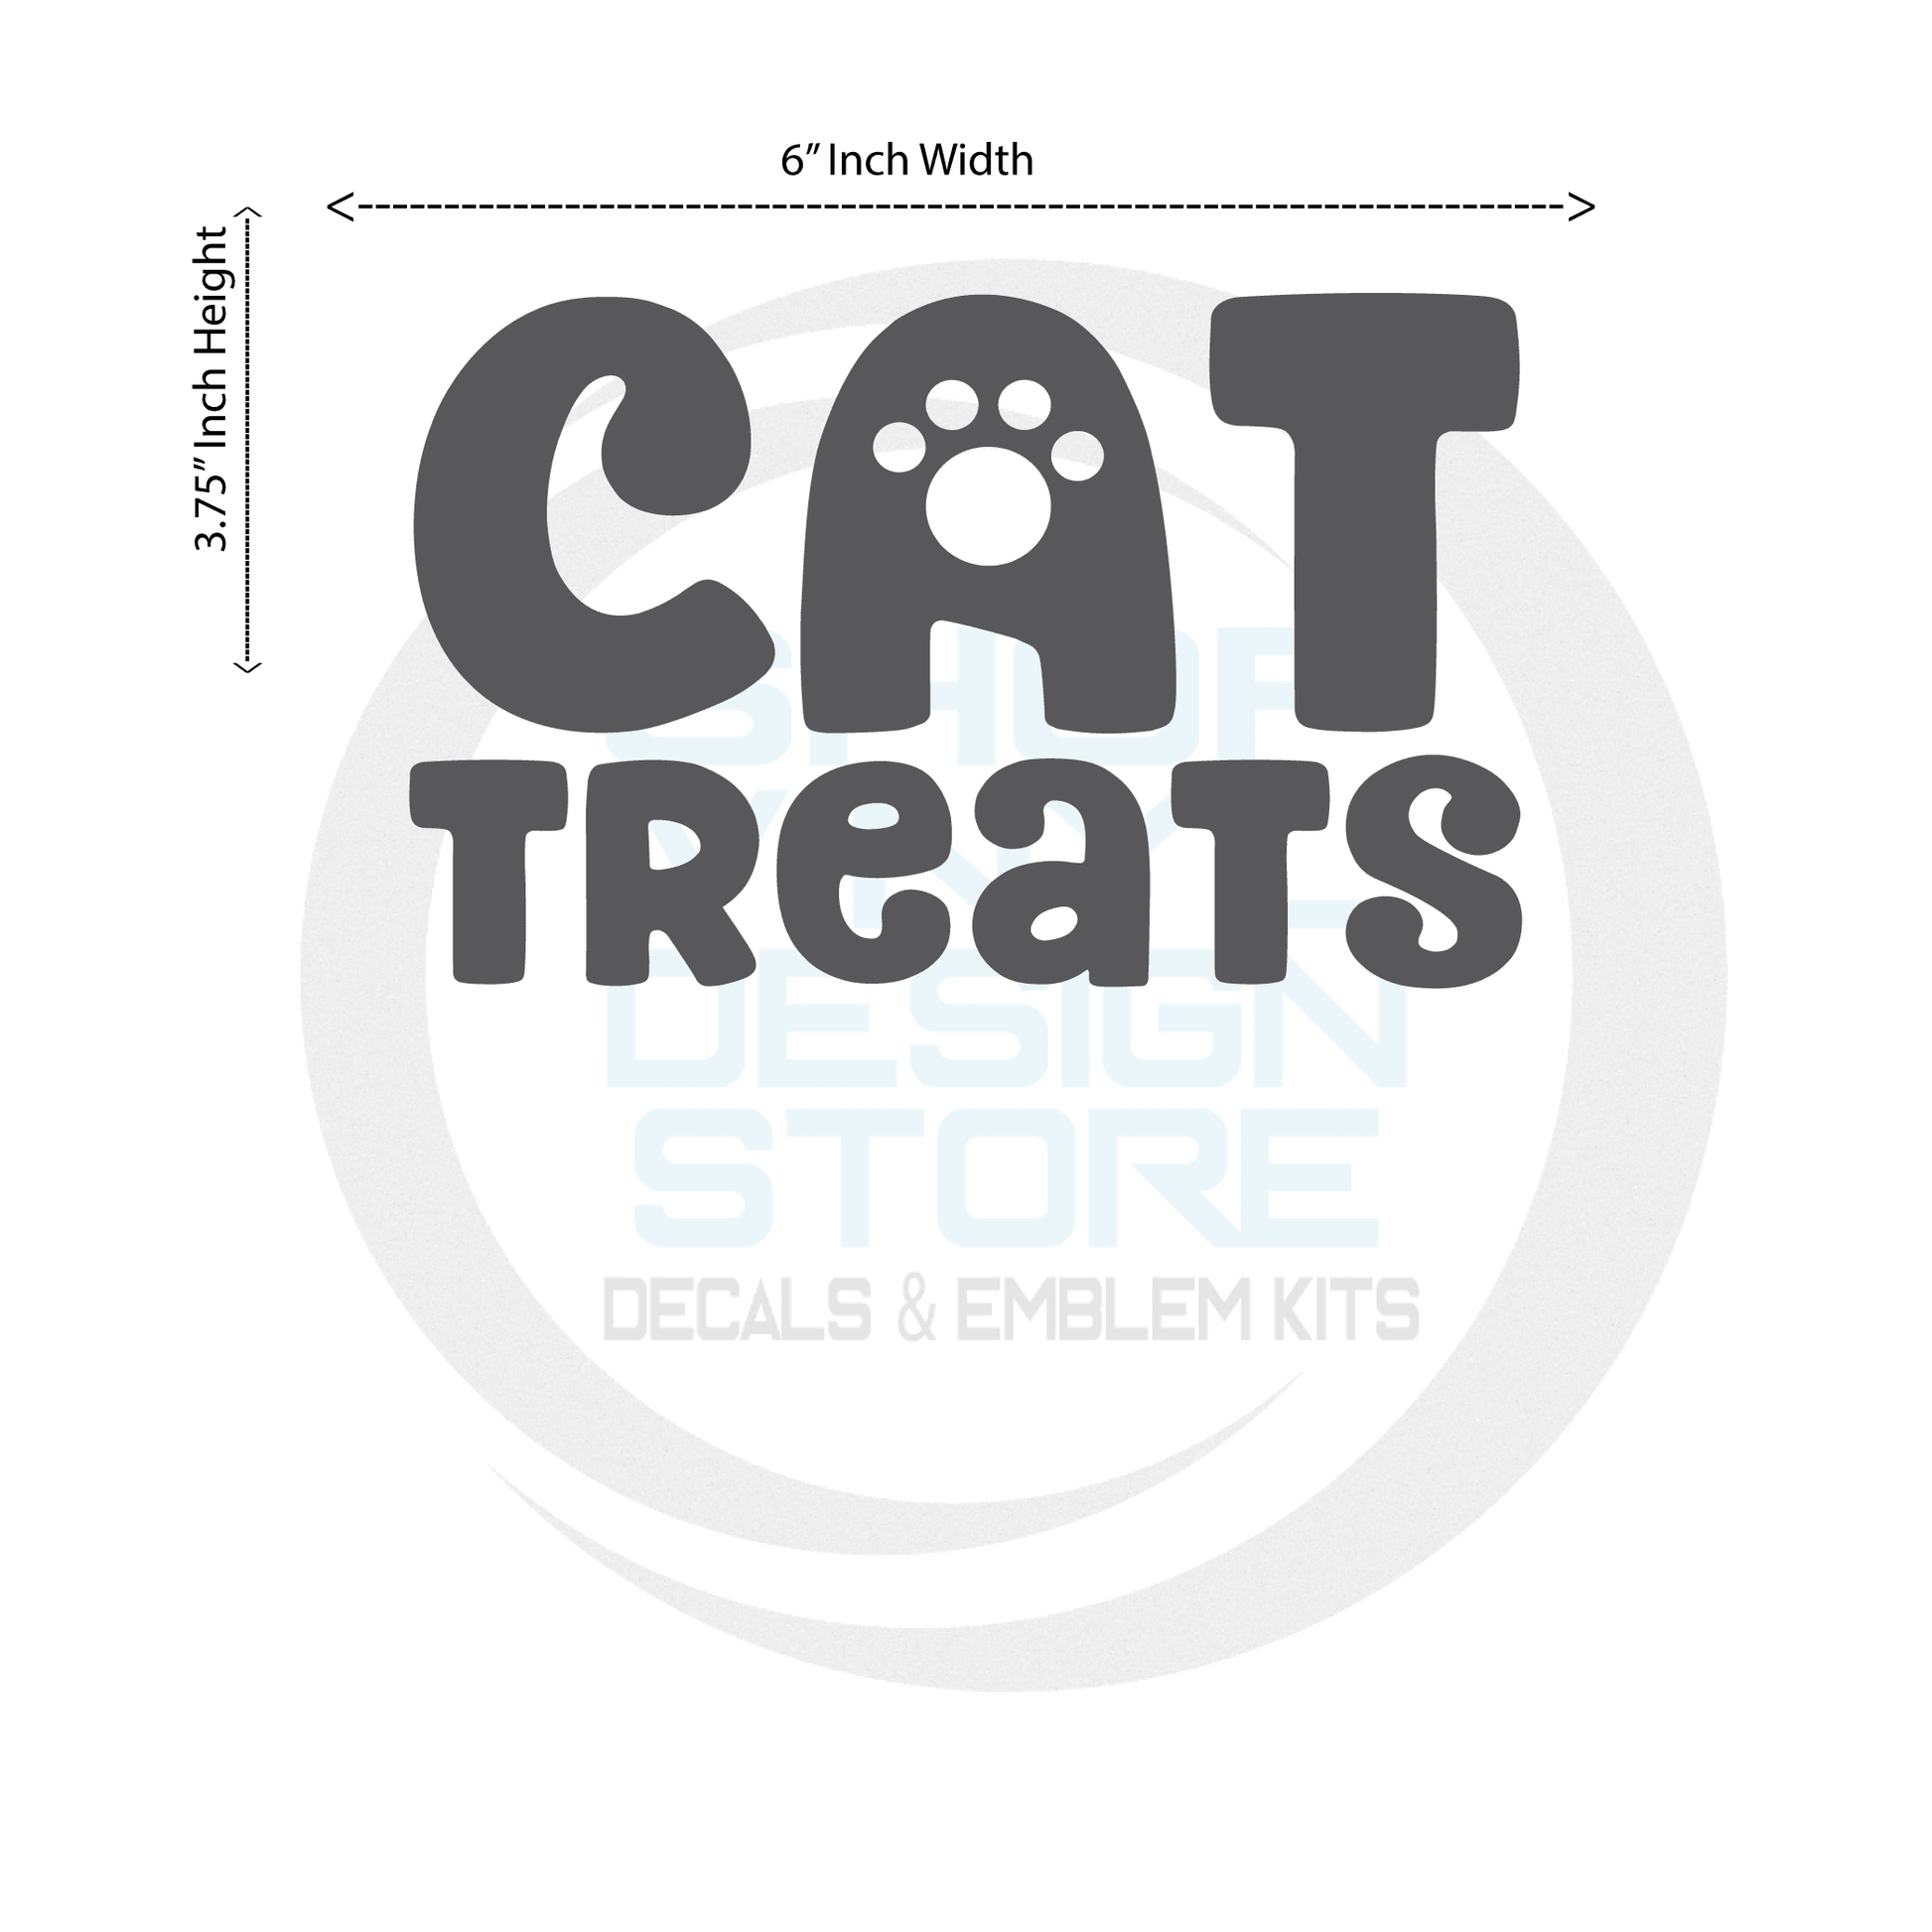 ShopVinylDesignStore.com Cat Treats with Paw Print Wide 6"W x 3.75"H Shop Vinyl Design decals stickers